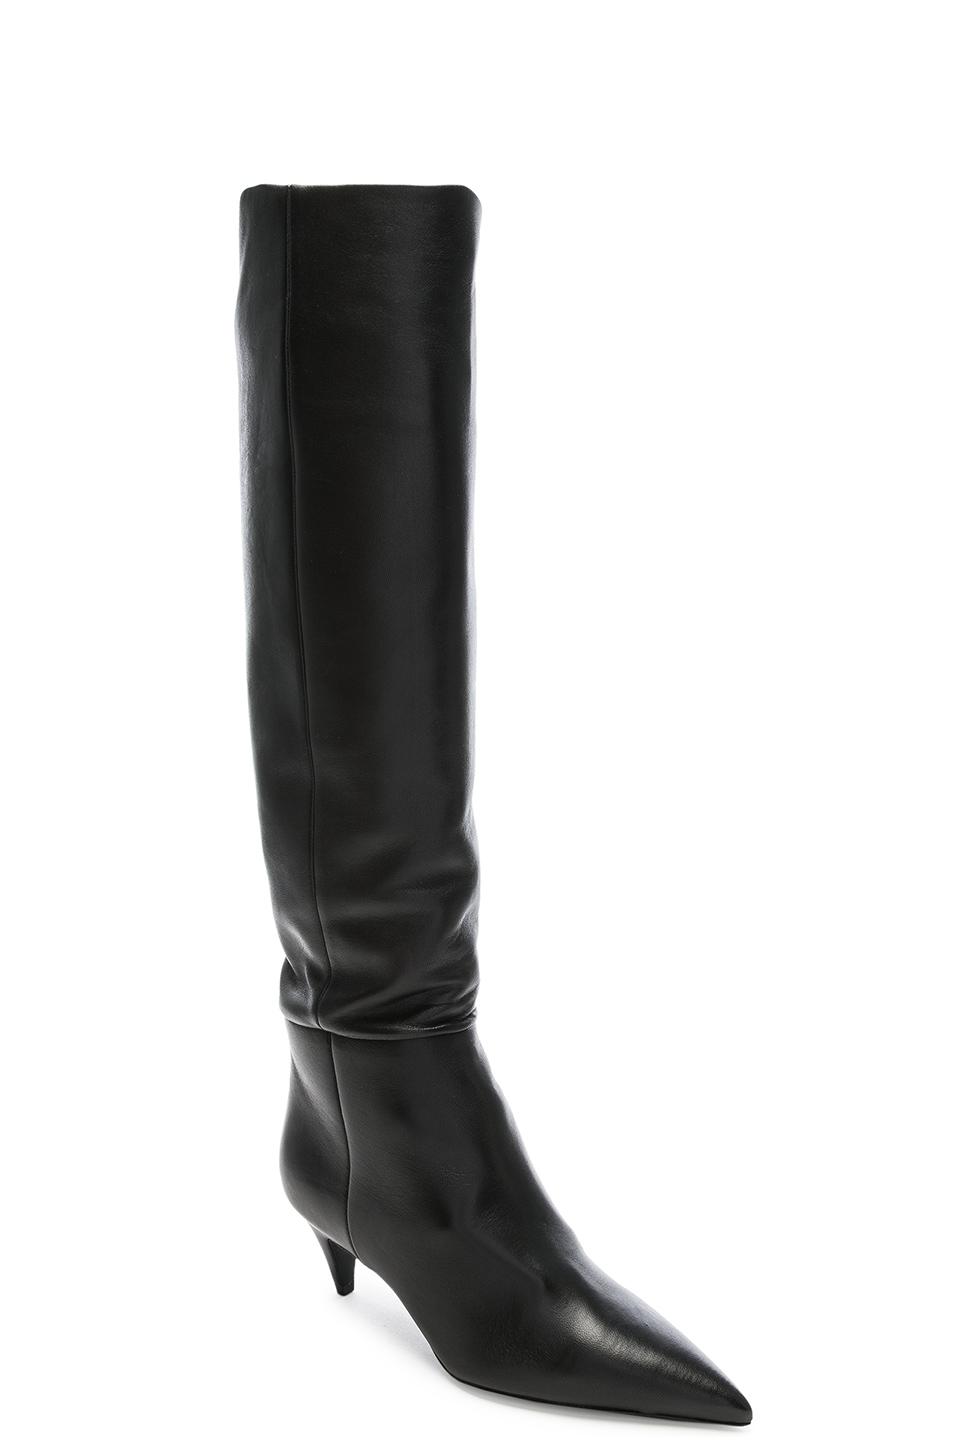 Saint Laurent Leather Charlotte Kitten Heel Knee High Boots in Black - Lyst